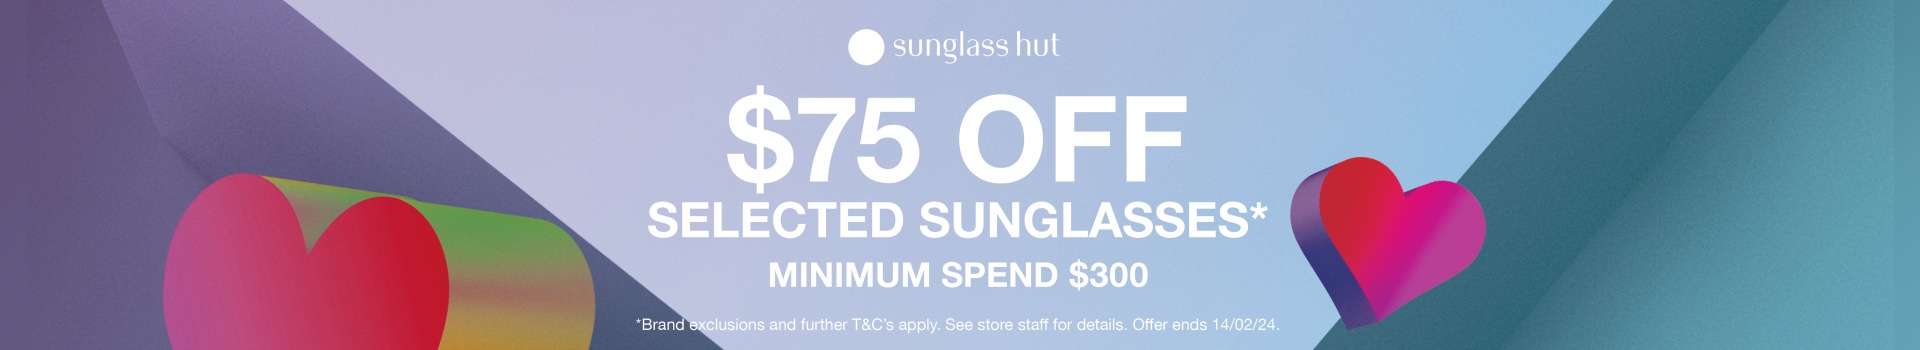 Arnette Sunglasses | Sunglass Hut®